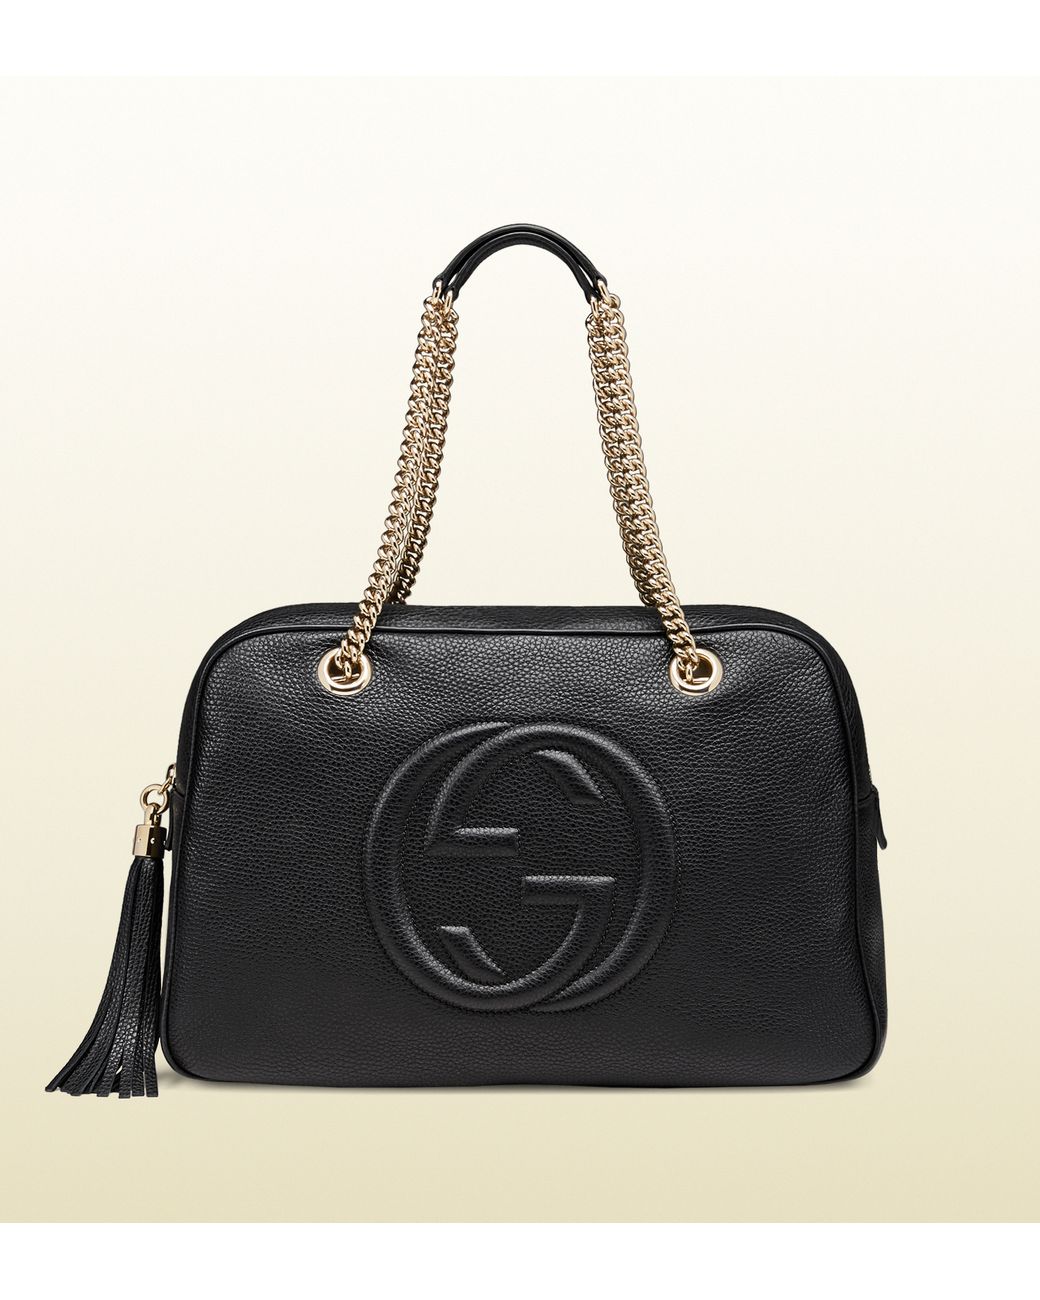 Gucci Vintage - Soho Patent Leather Chain Shoulder Bag - Pink